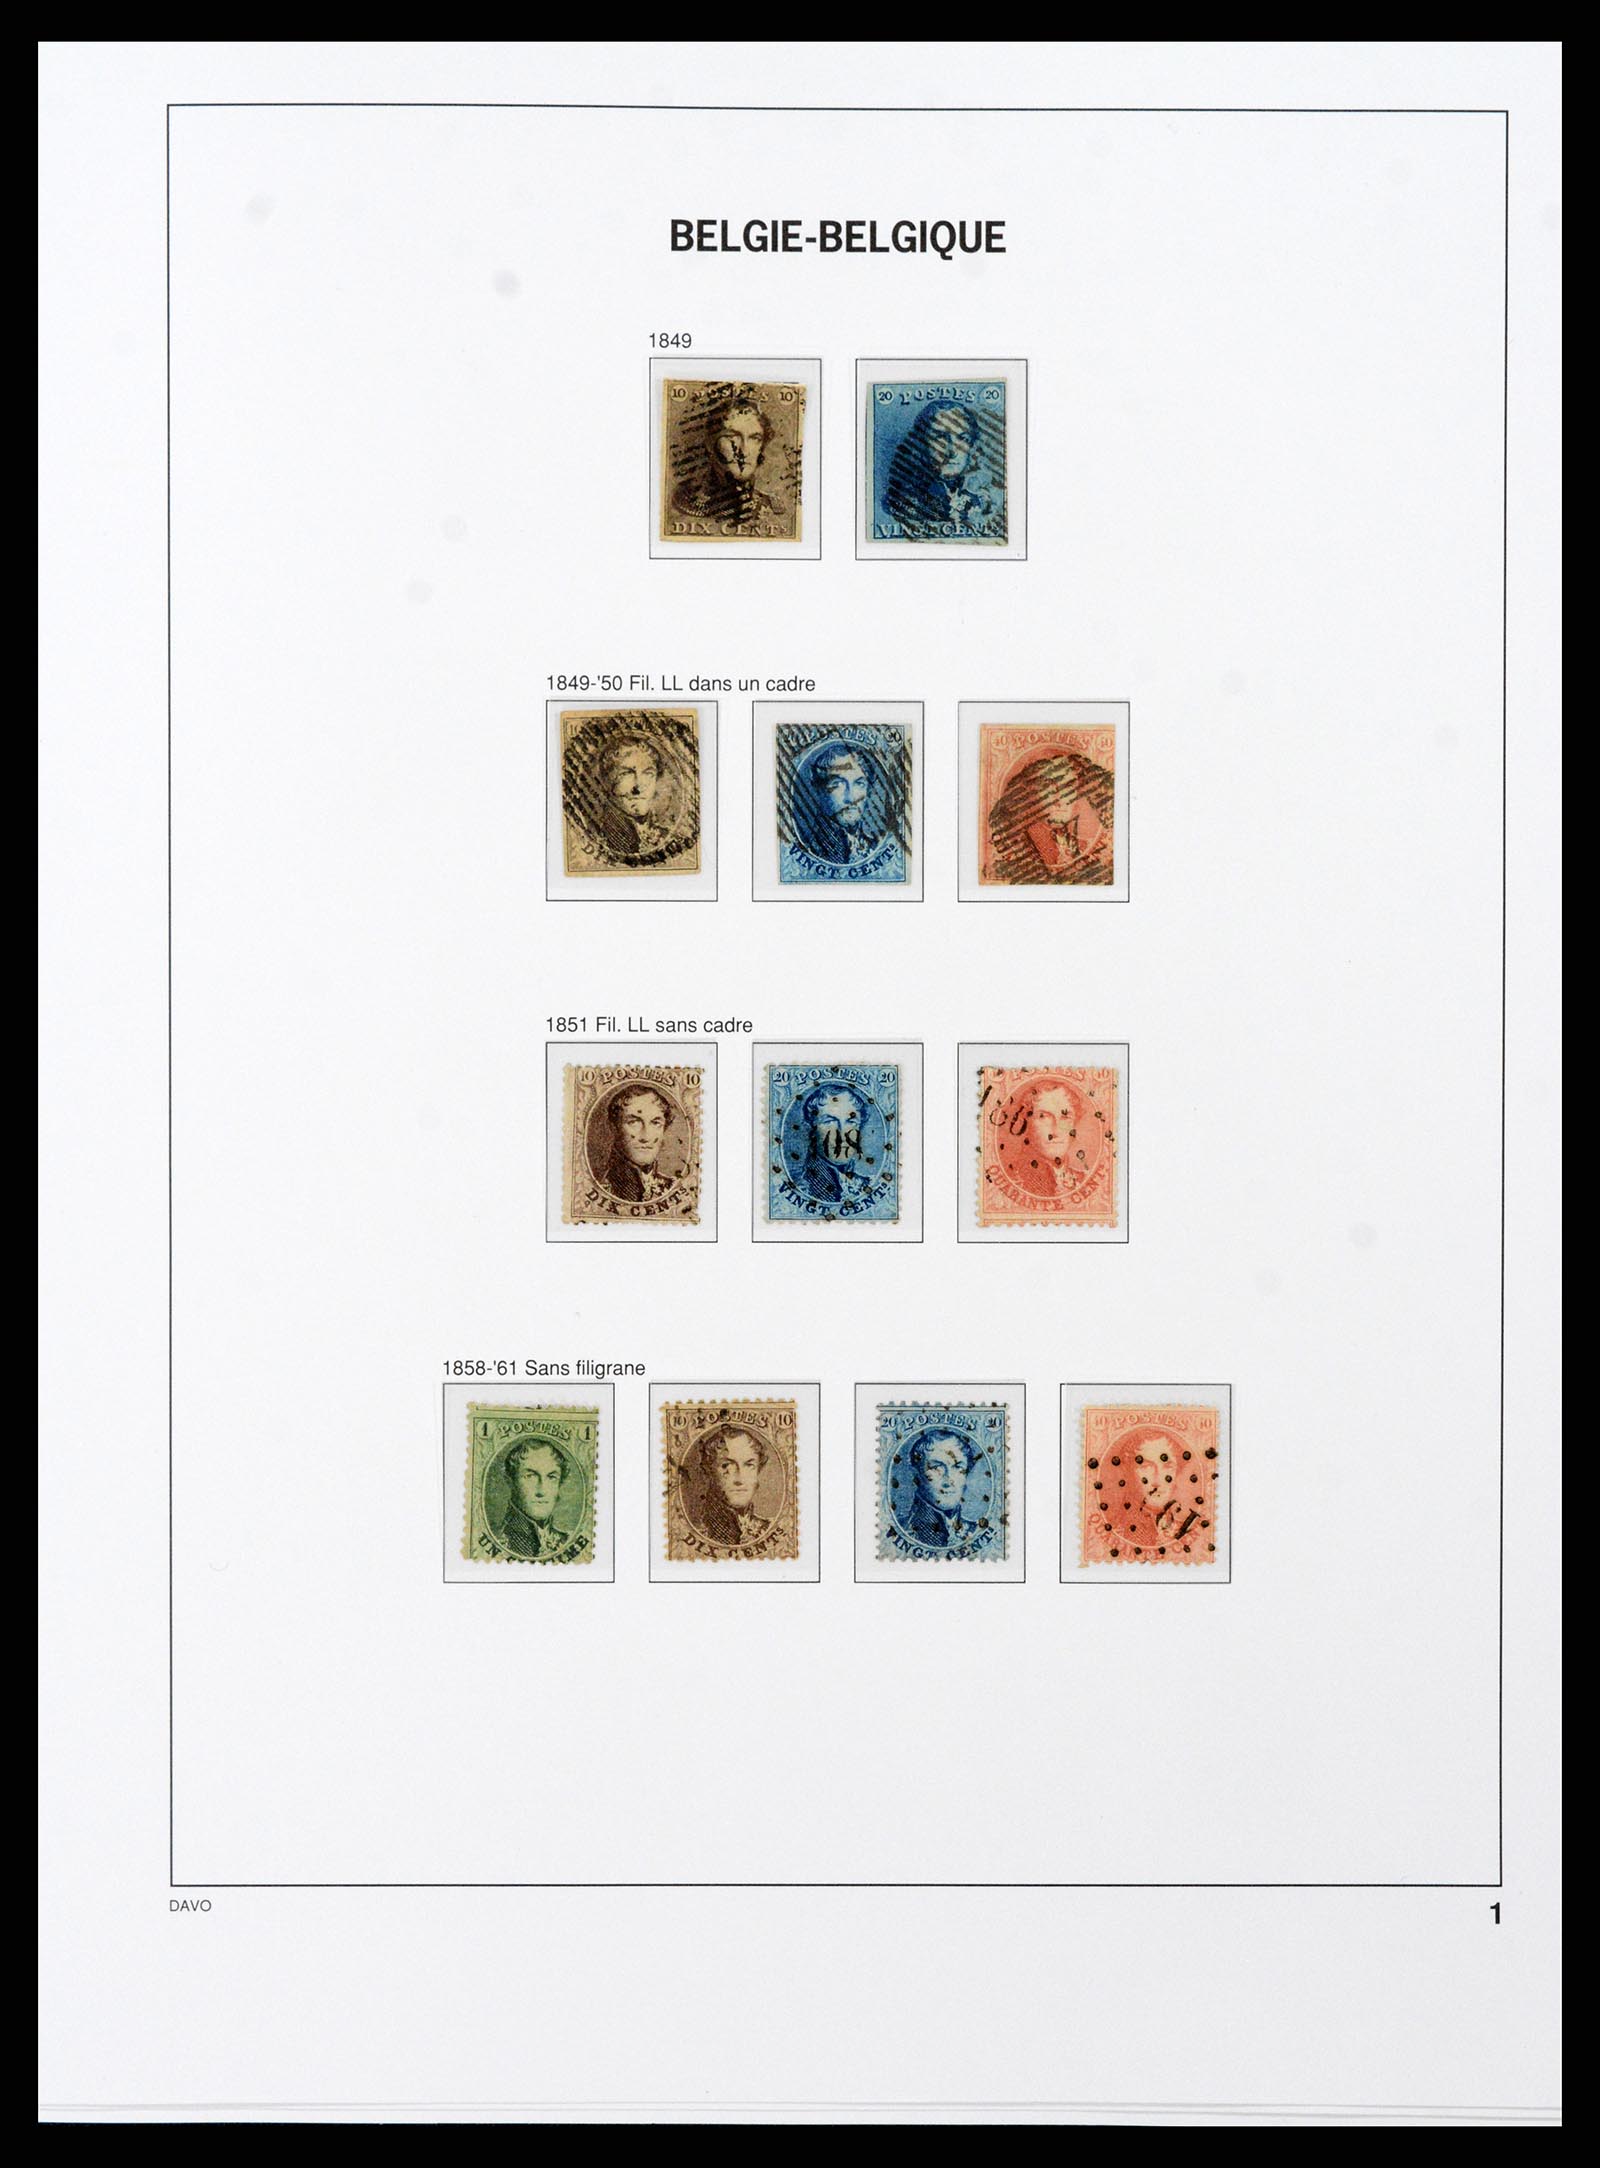 38073 001 - Stamp collection 38073 Belgium 1849-1950.